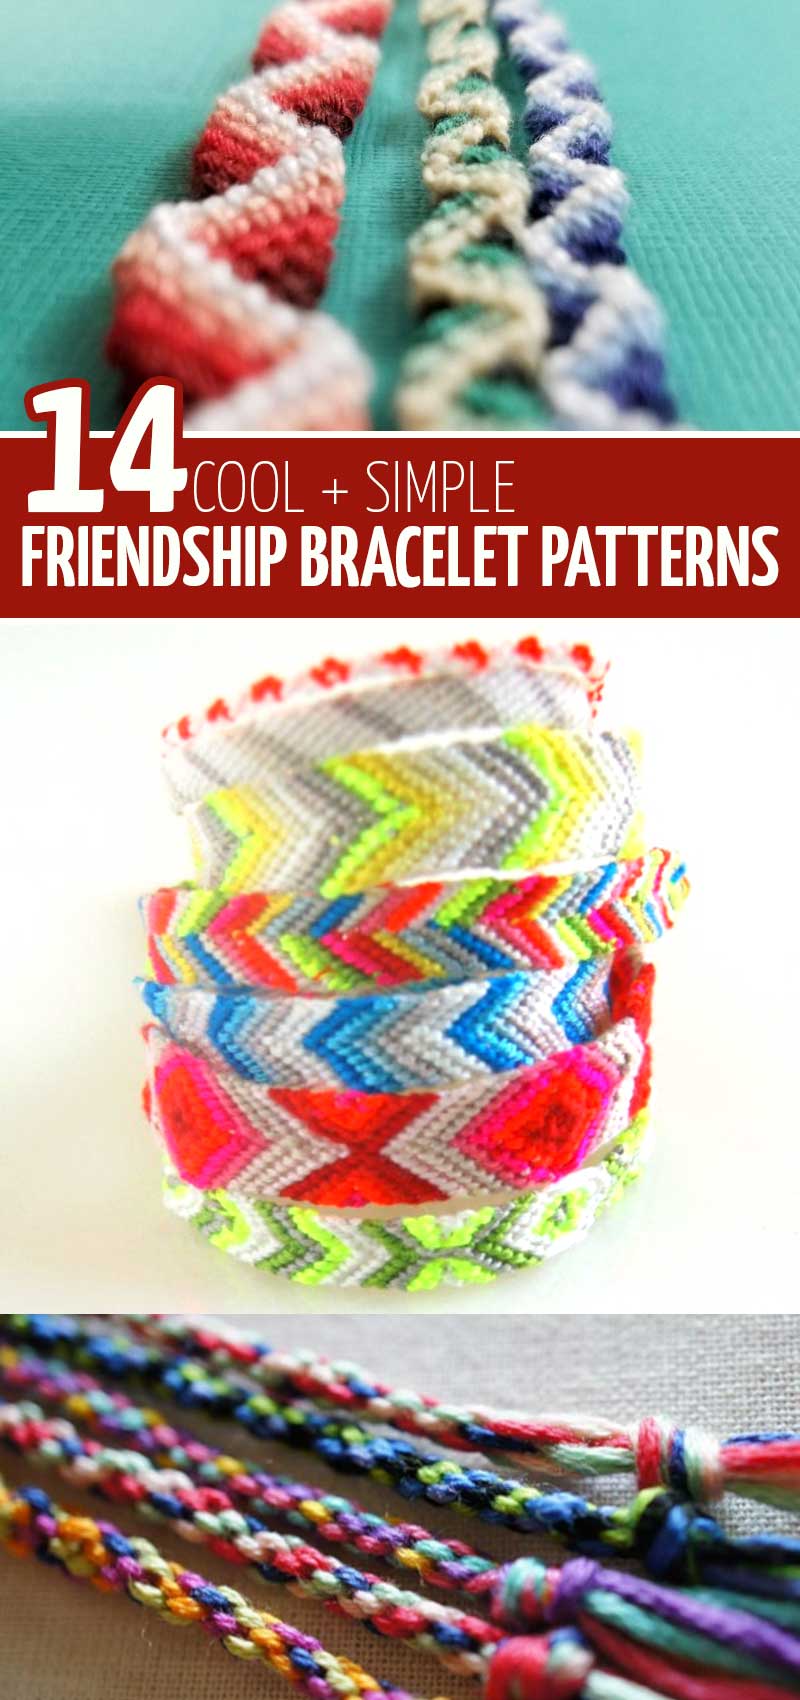 Normal Pattern 24749  BraceletBookcom  Diy friendship bracelets patterns  Friendship bracelet patterns easy Friendship bracelet patterns